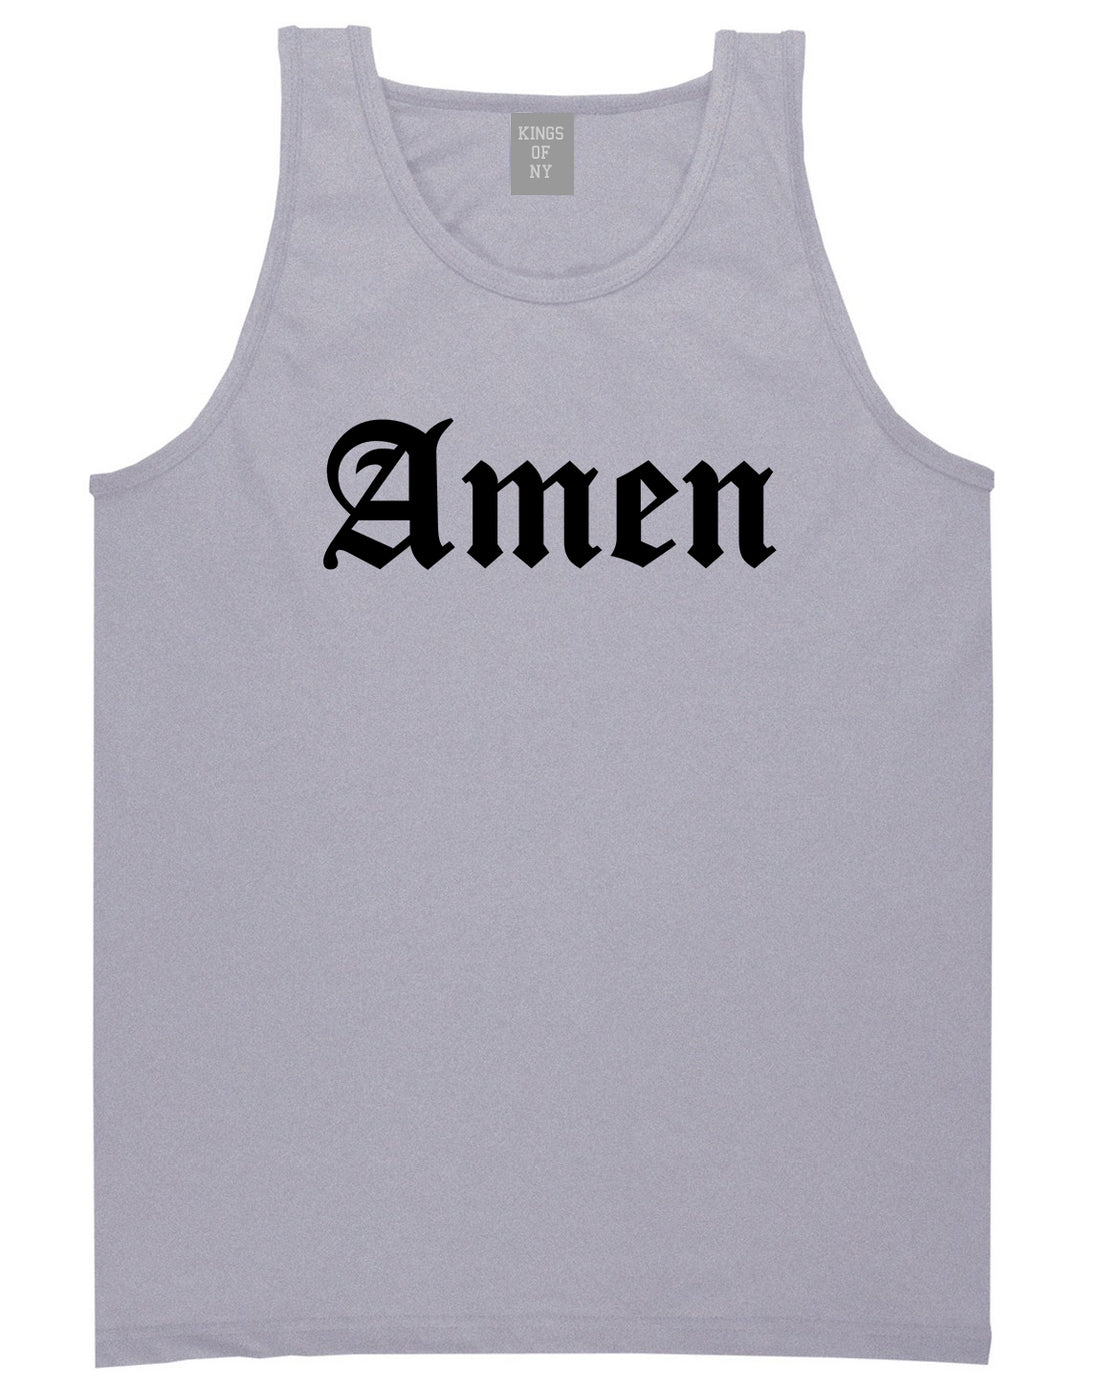 Amen Old English Prayer Mens Tank Top T-Shirt Grey